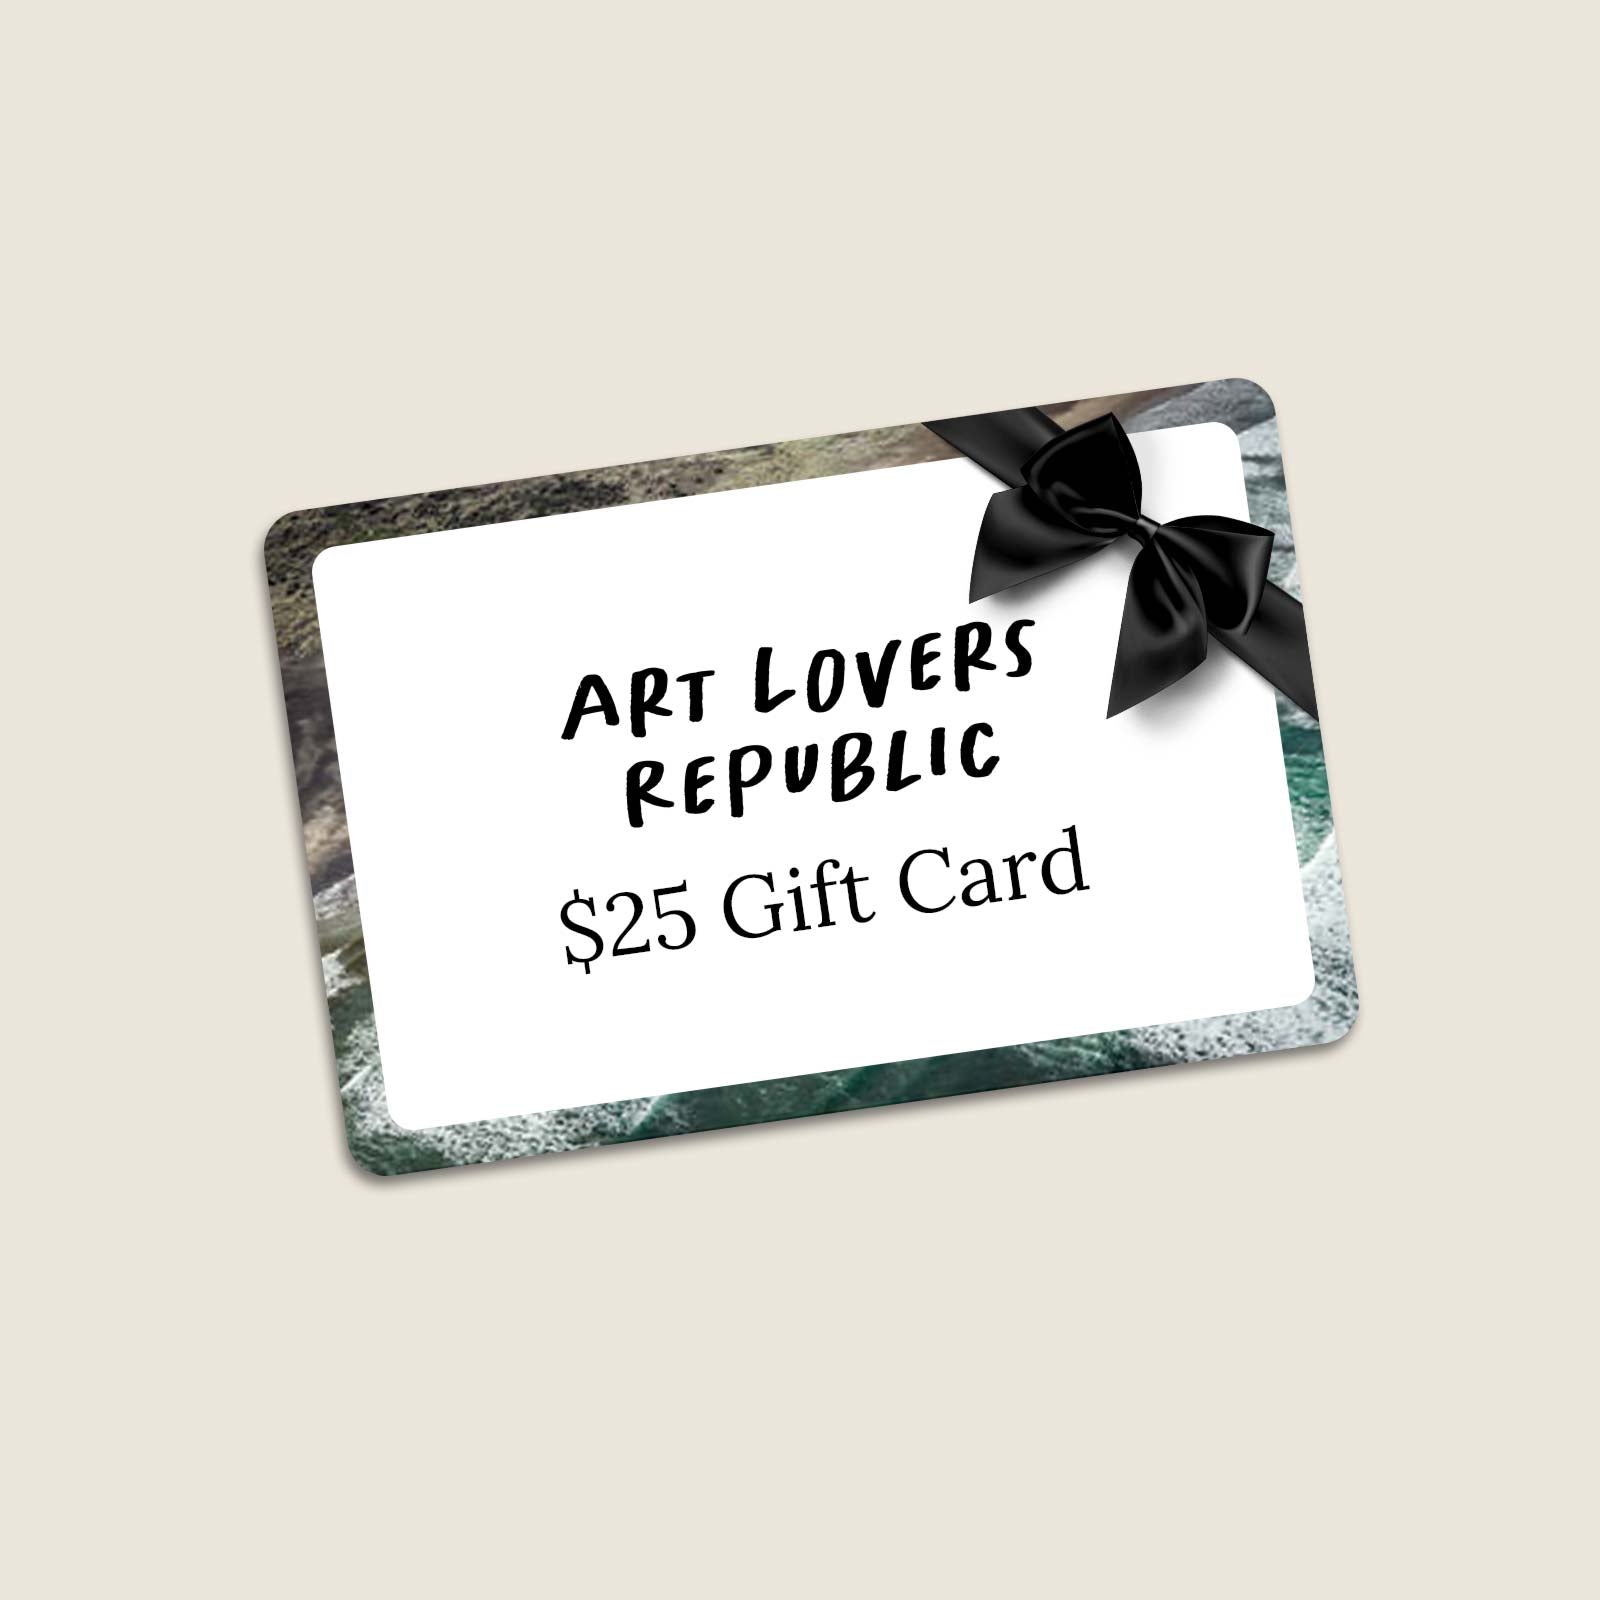 Republic Card Lovers Gift Art